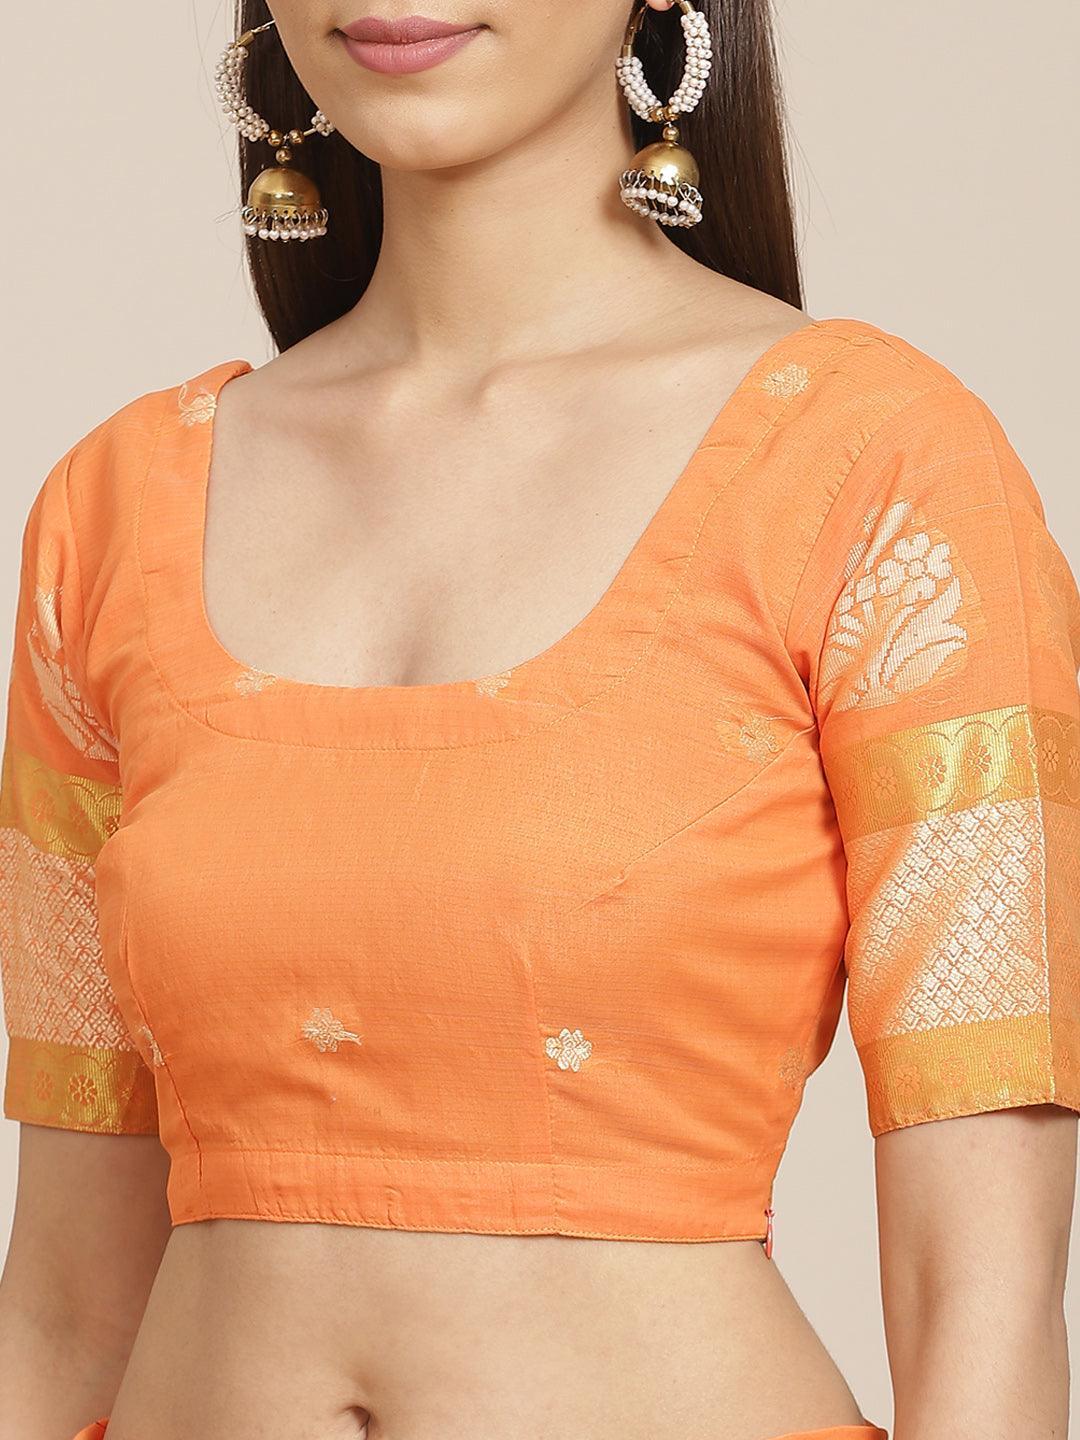 Orange Woven Design Cotton Saree - ShopLibas